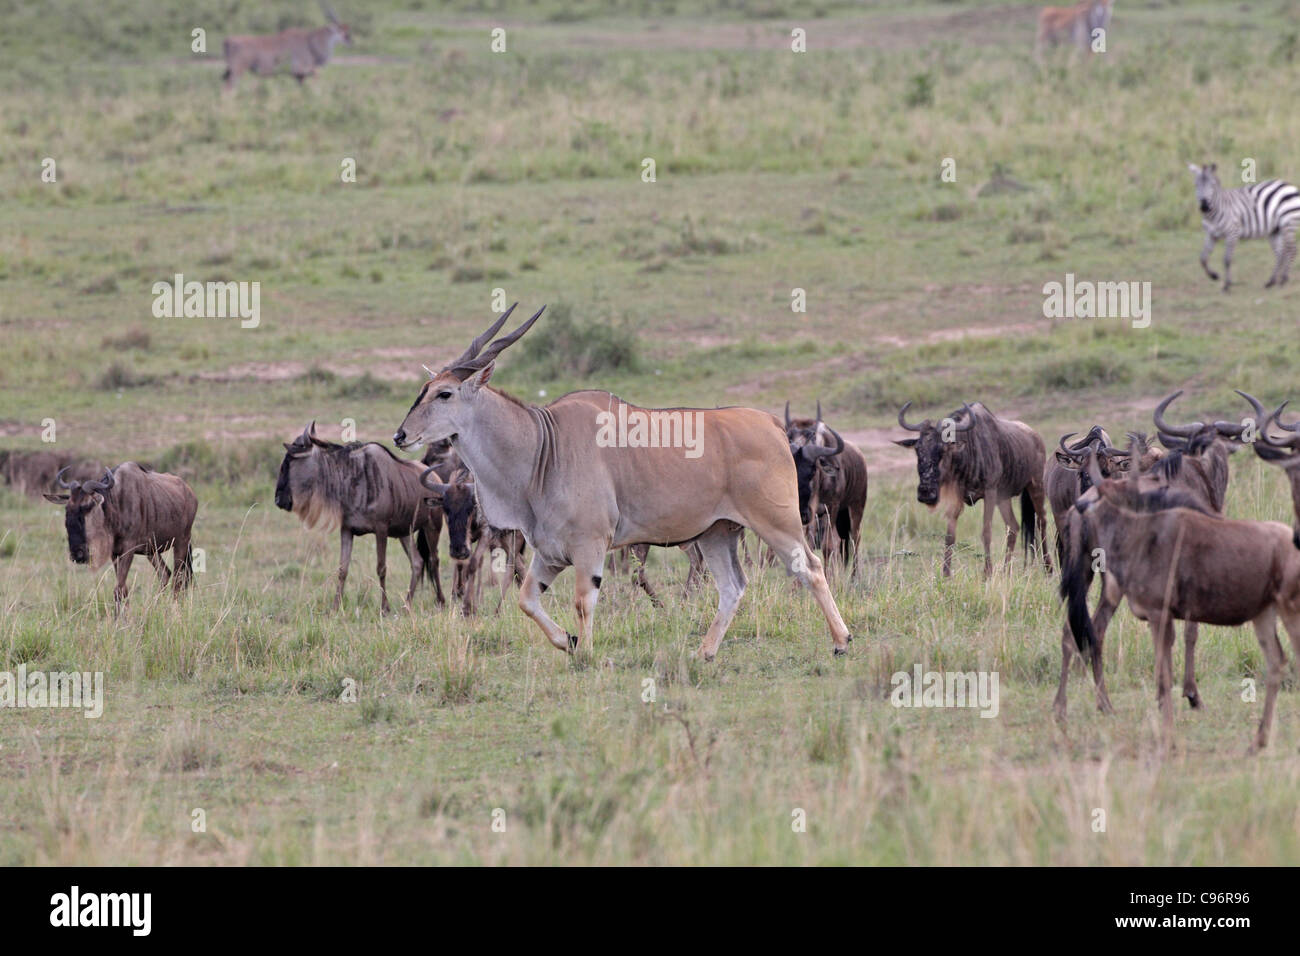 Eland antelope with a herd of Wildebeest Stock Photo